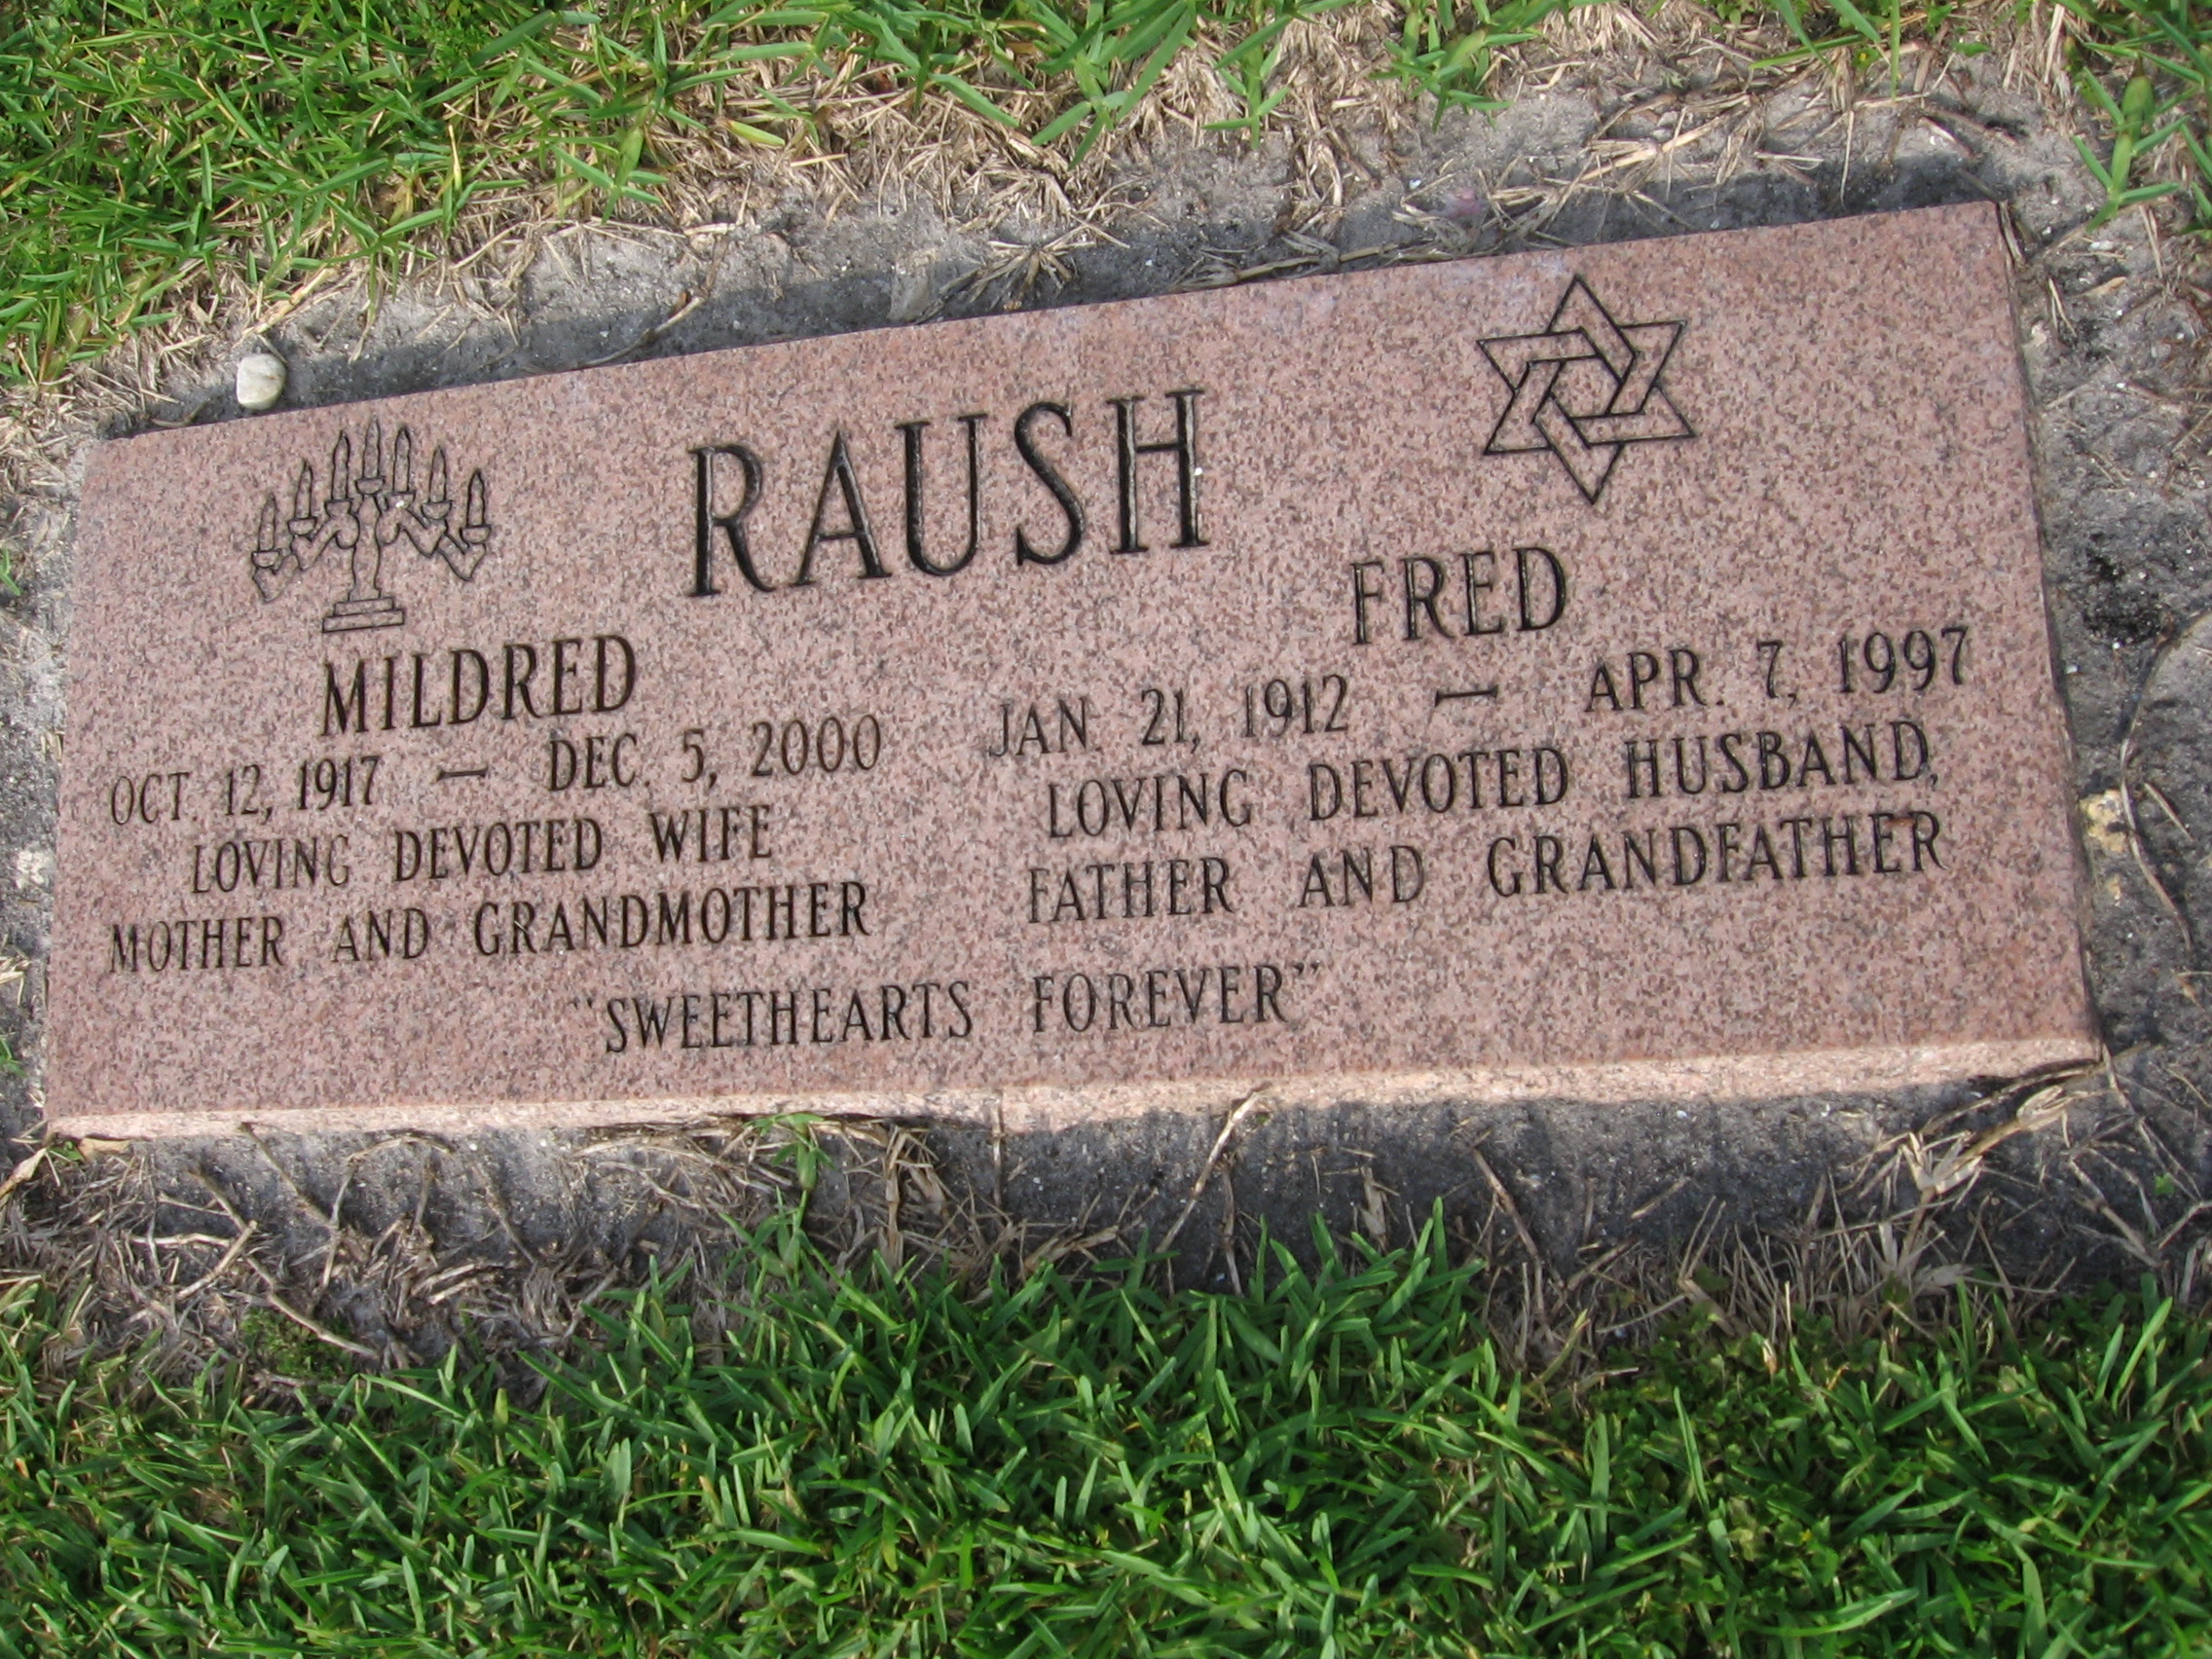 Fred Raush